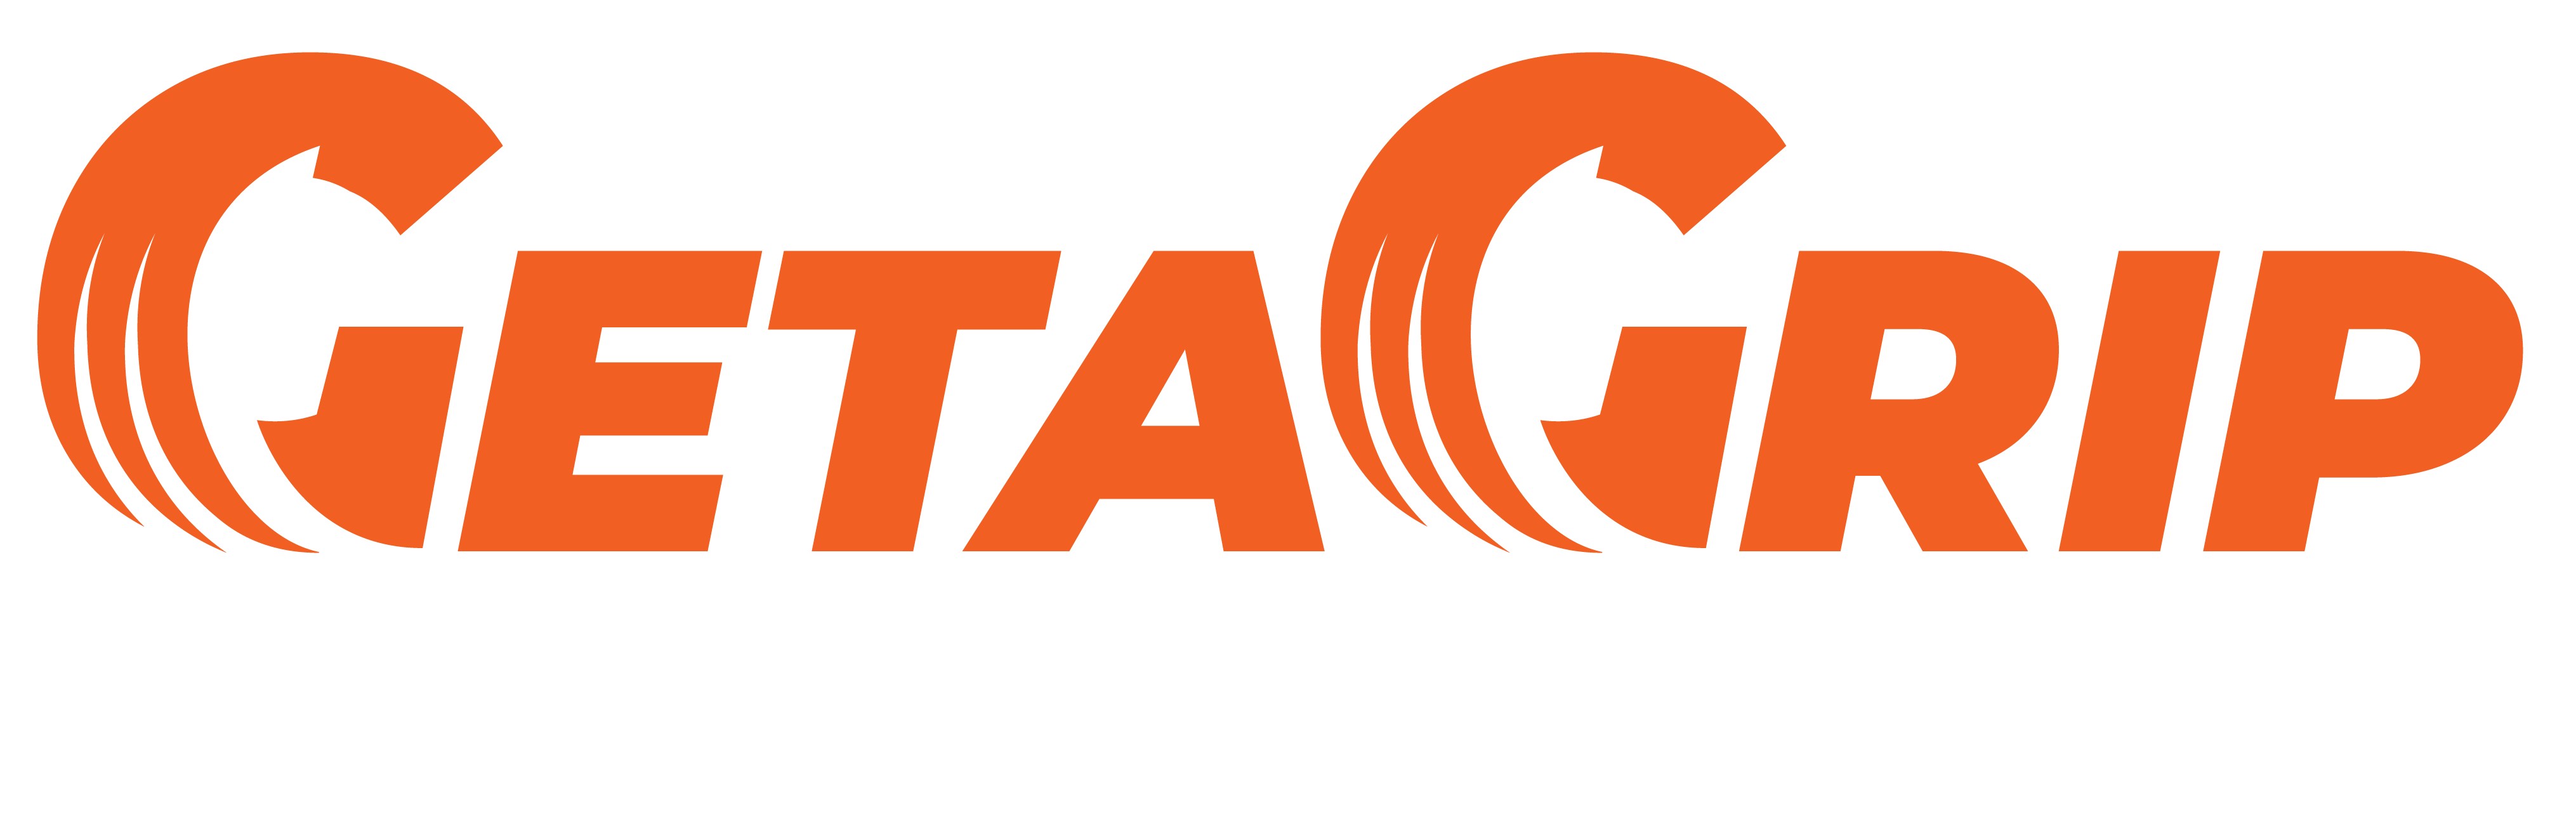 GetAGrip tyre & fleet logo